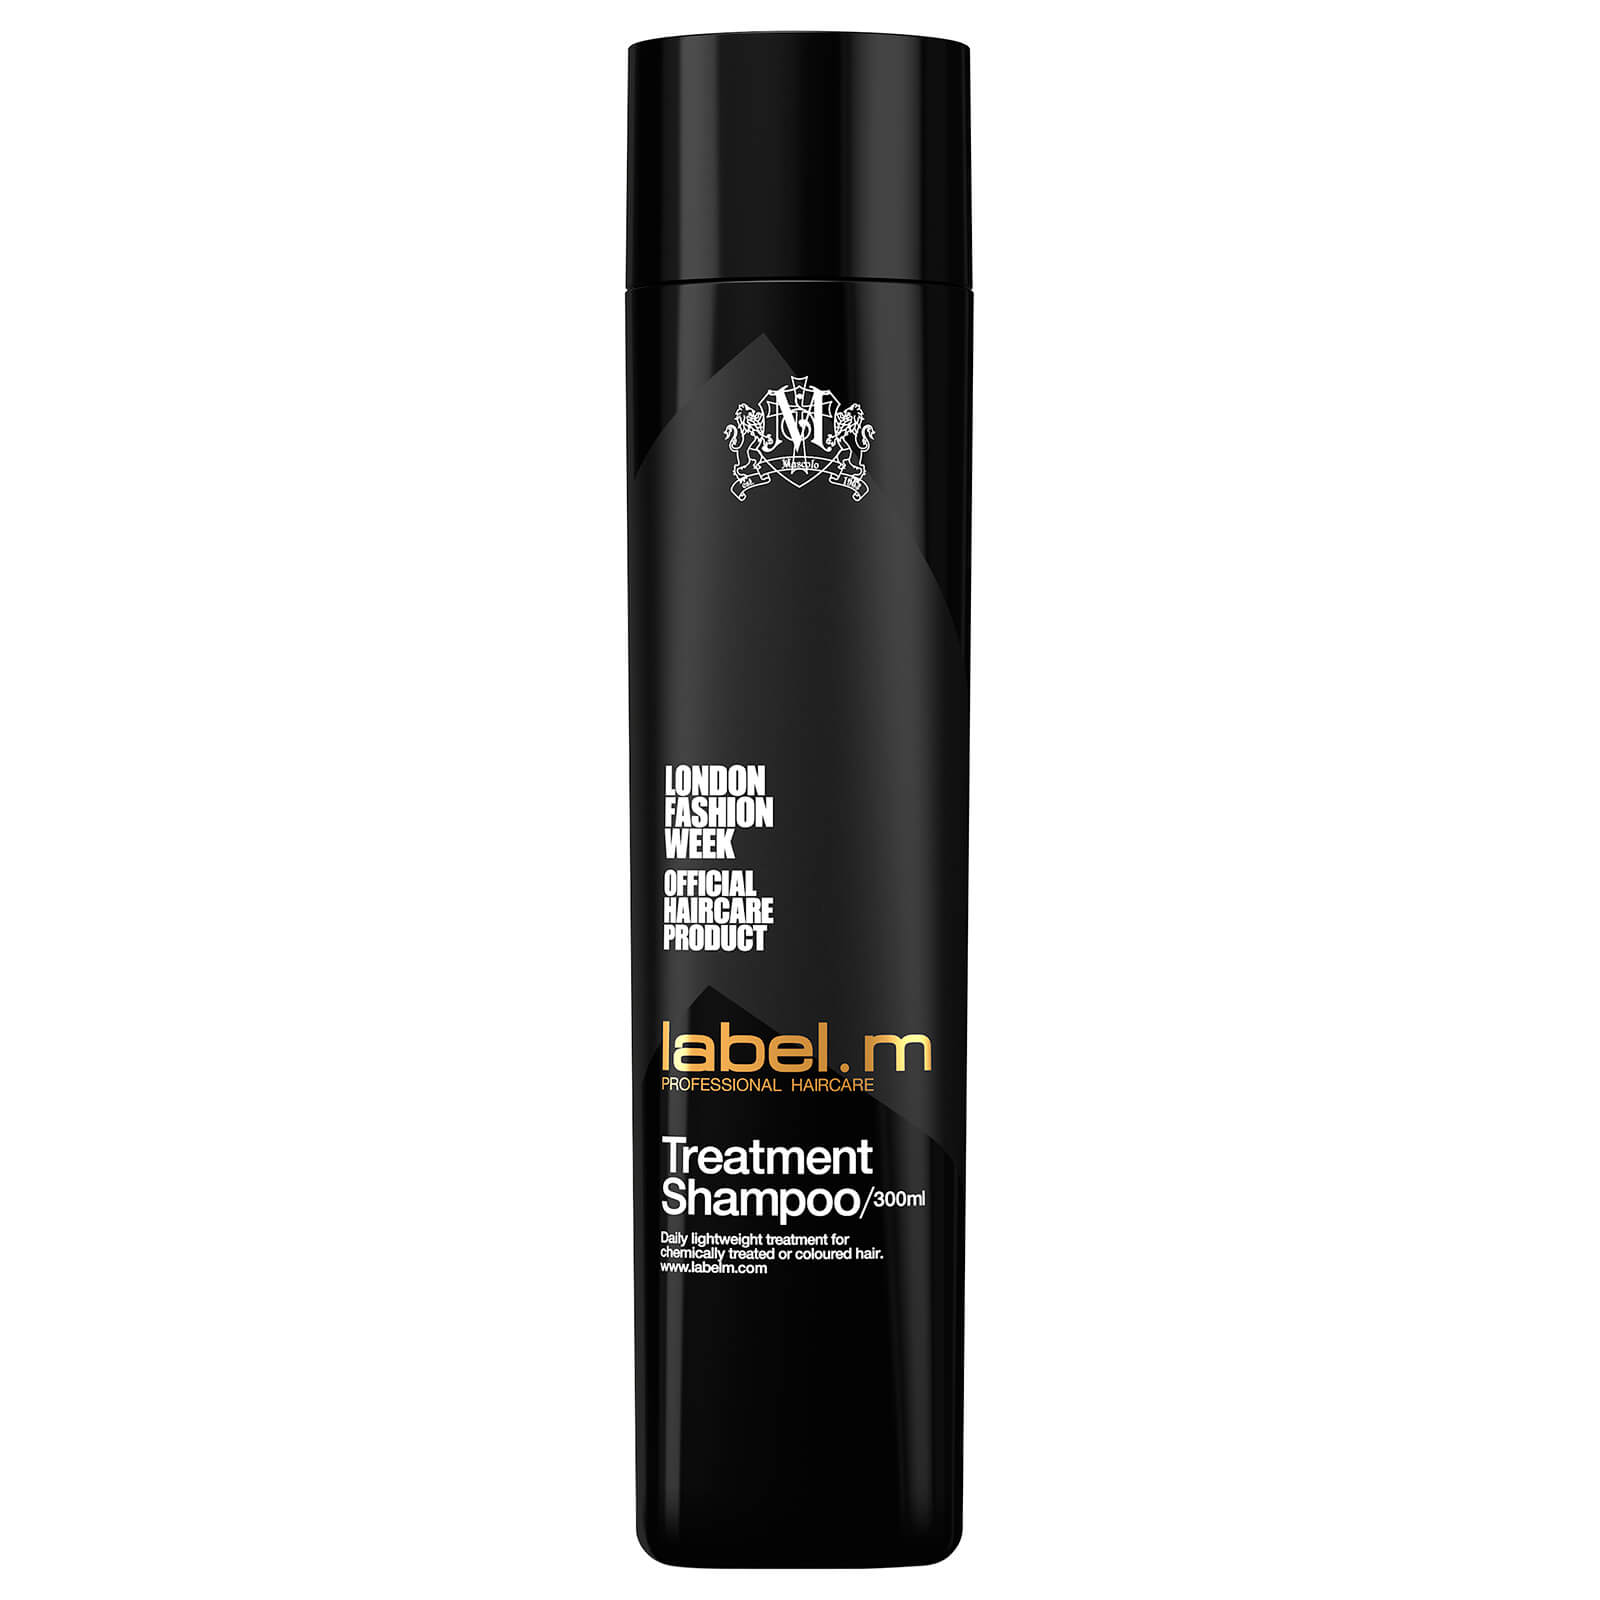 Shampoo Label with Logo - label.m Treatment Shampoo (300ml) | Free Shipping | Lookfantastic